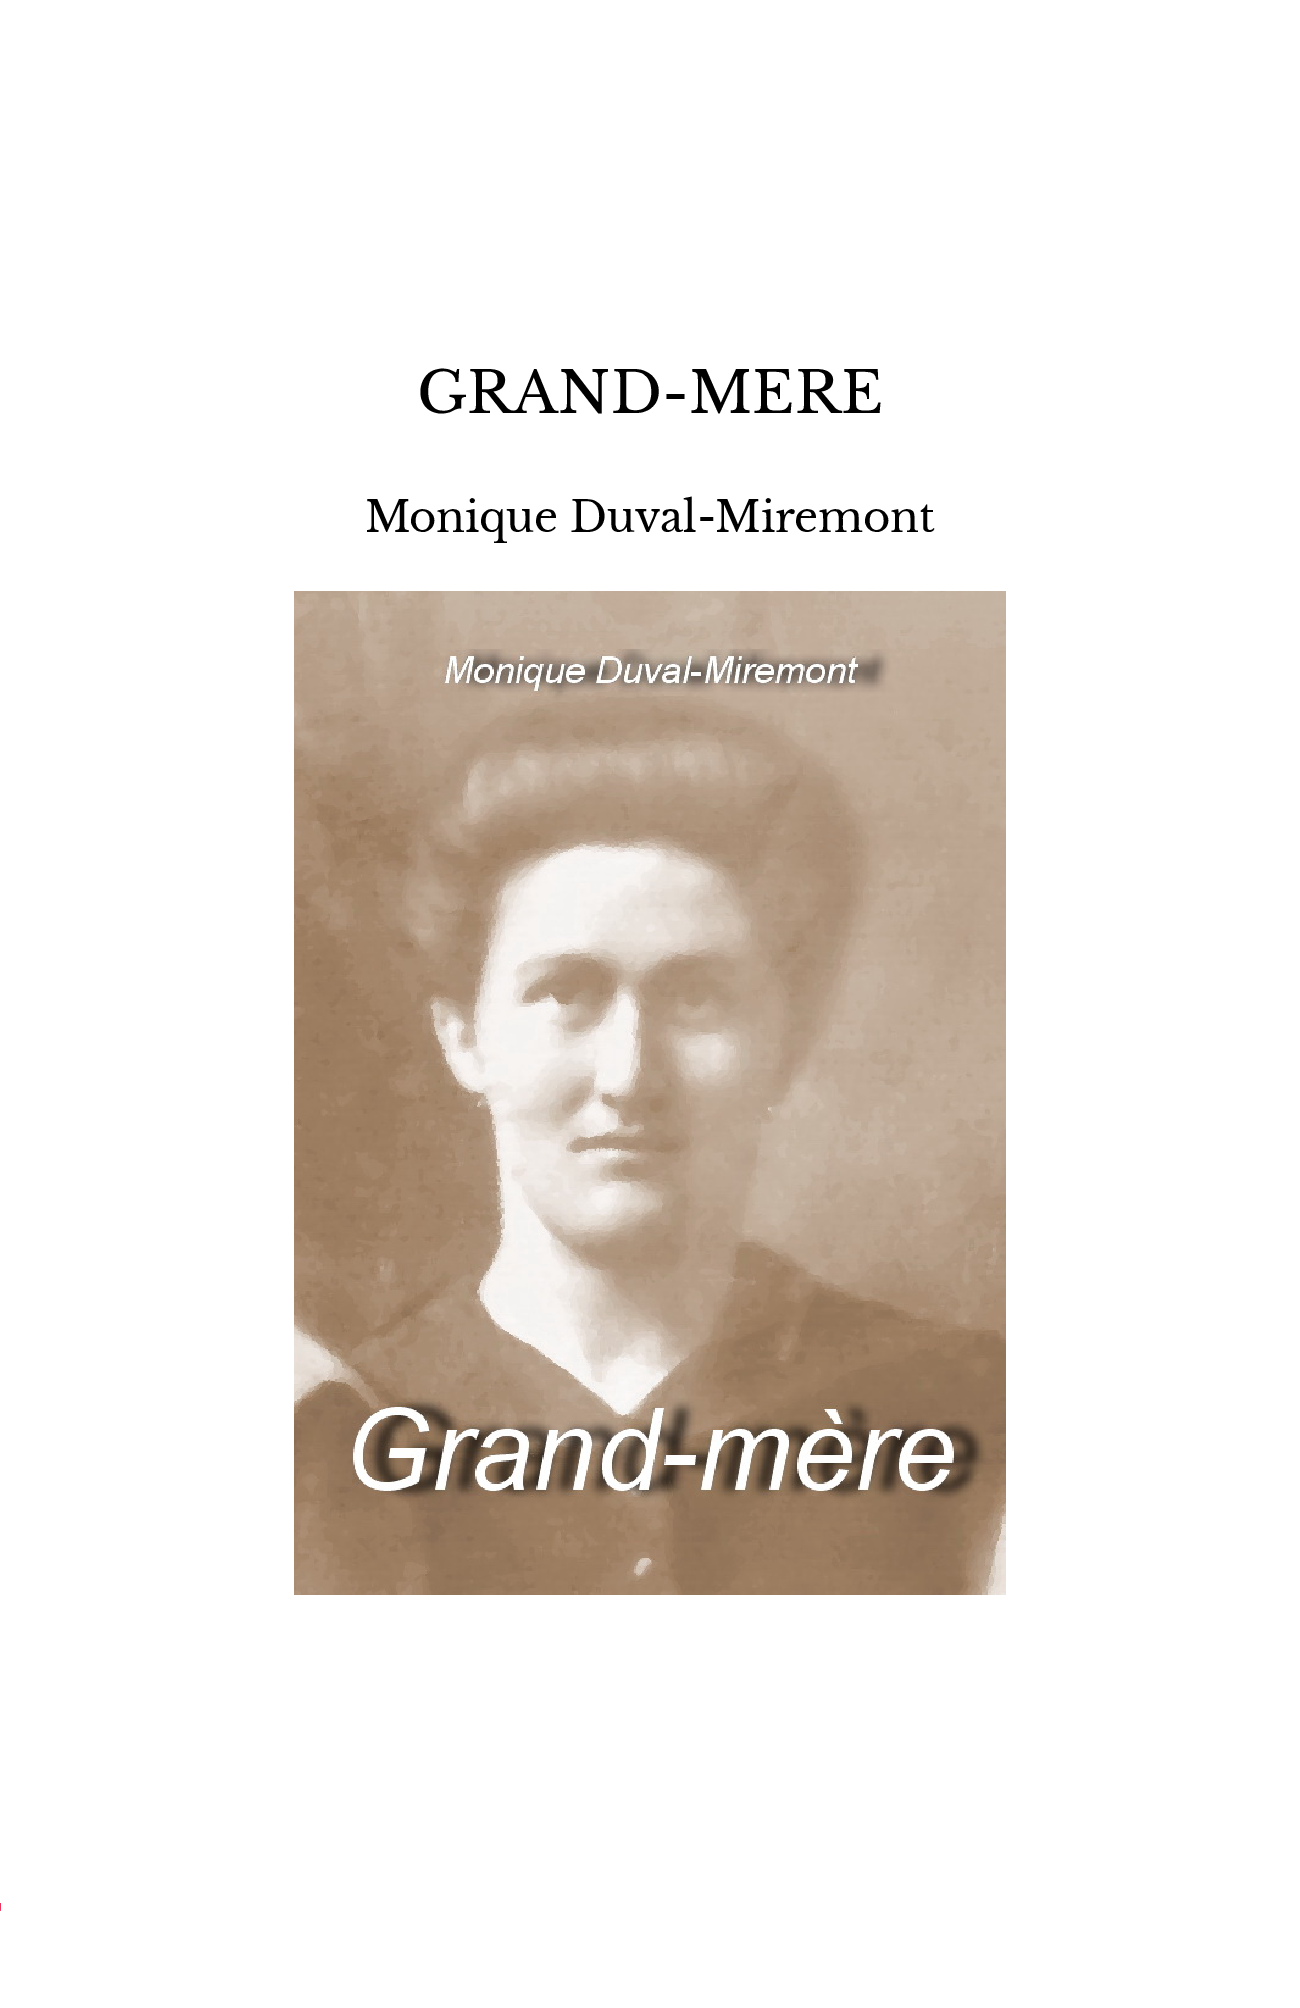 GRAND-MERE